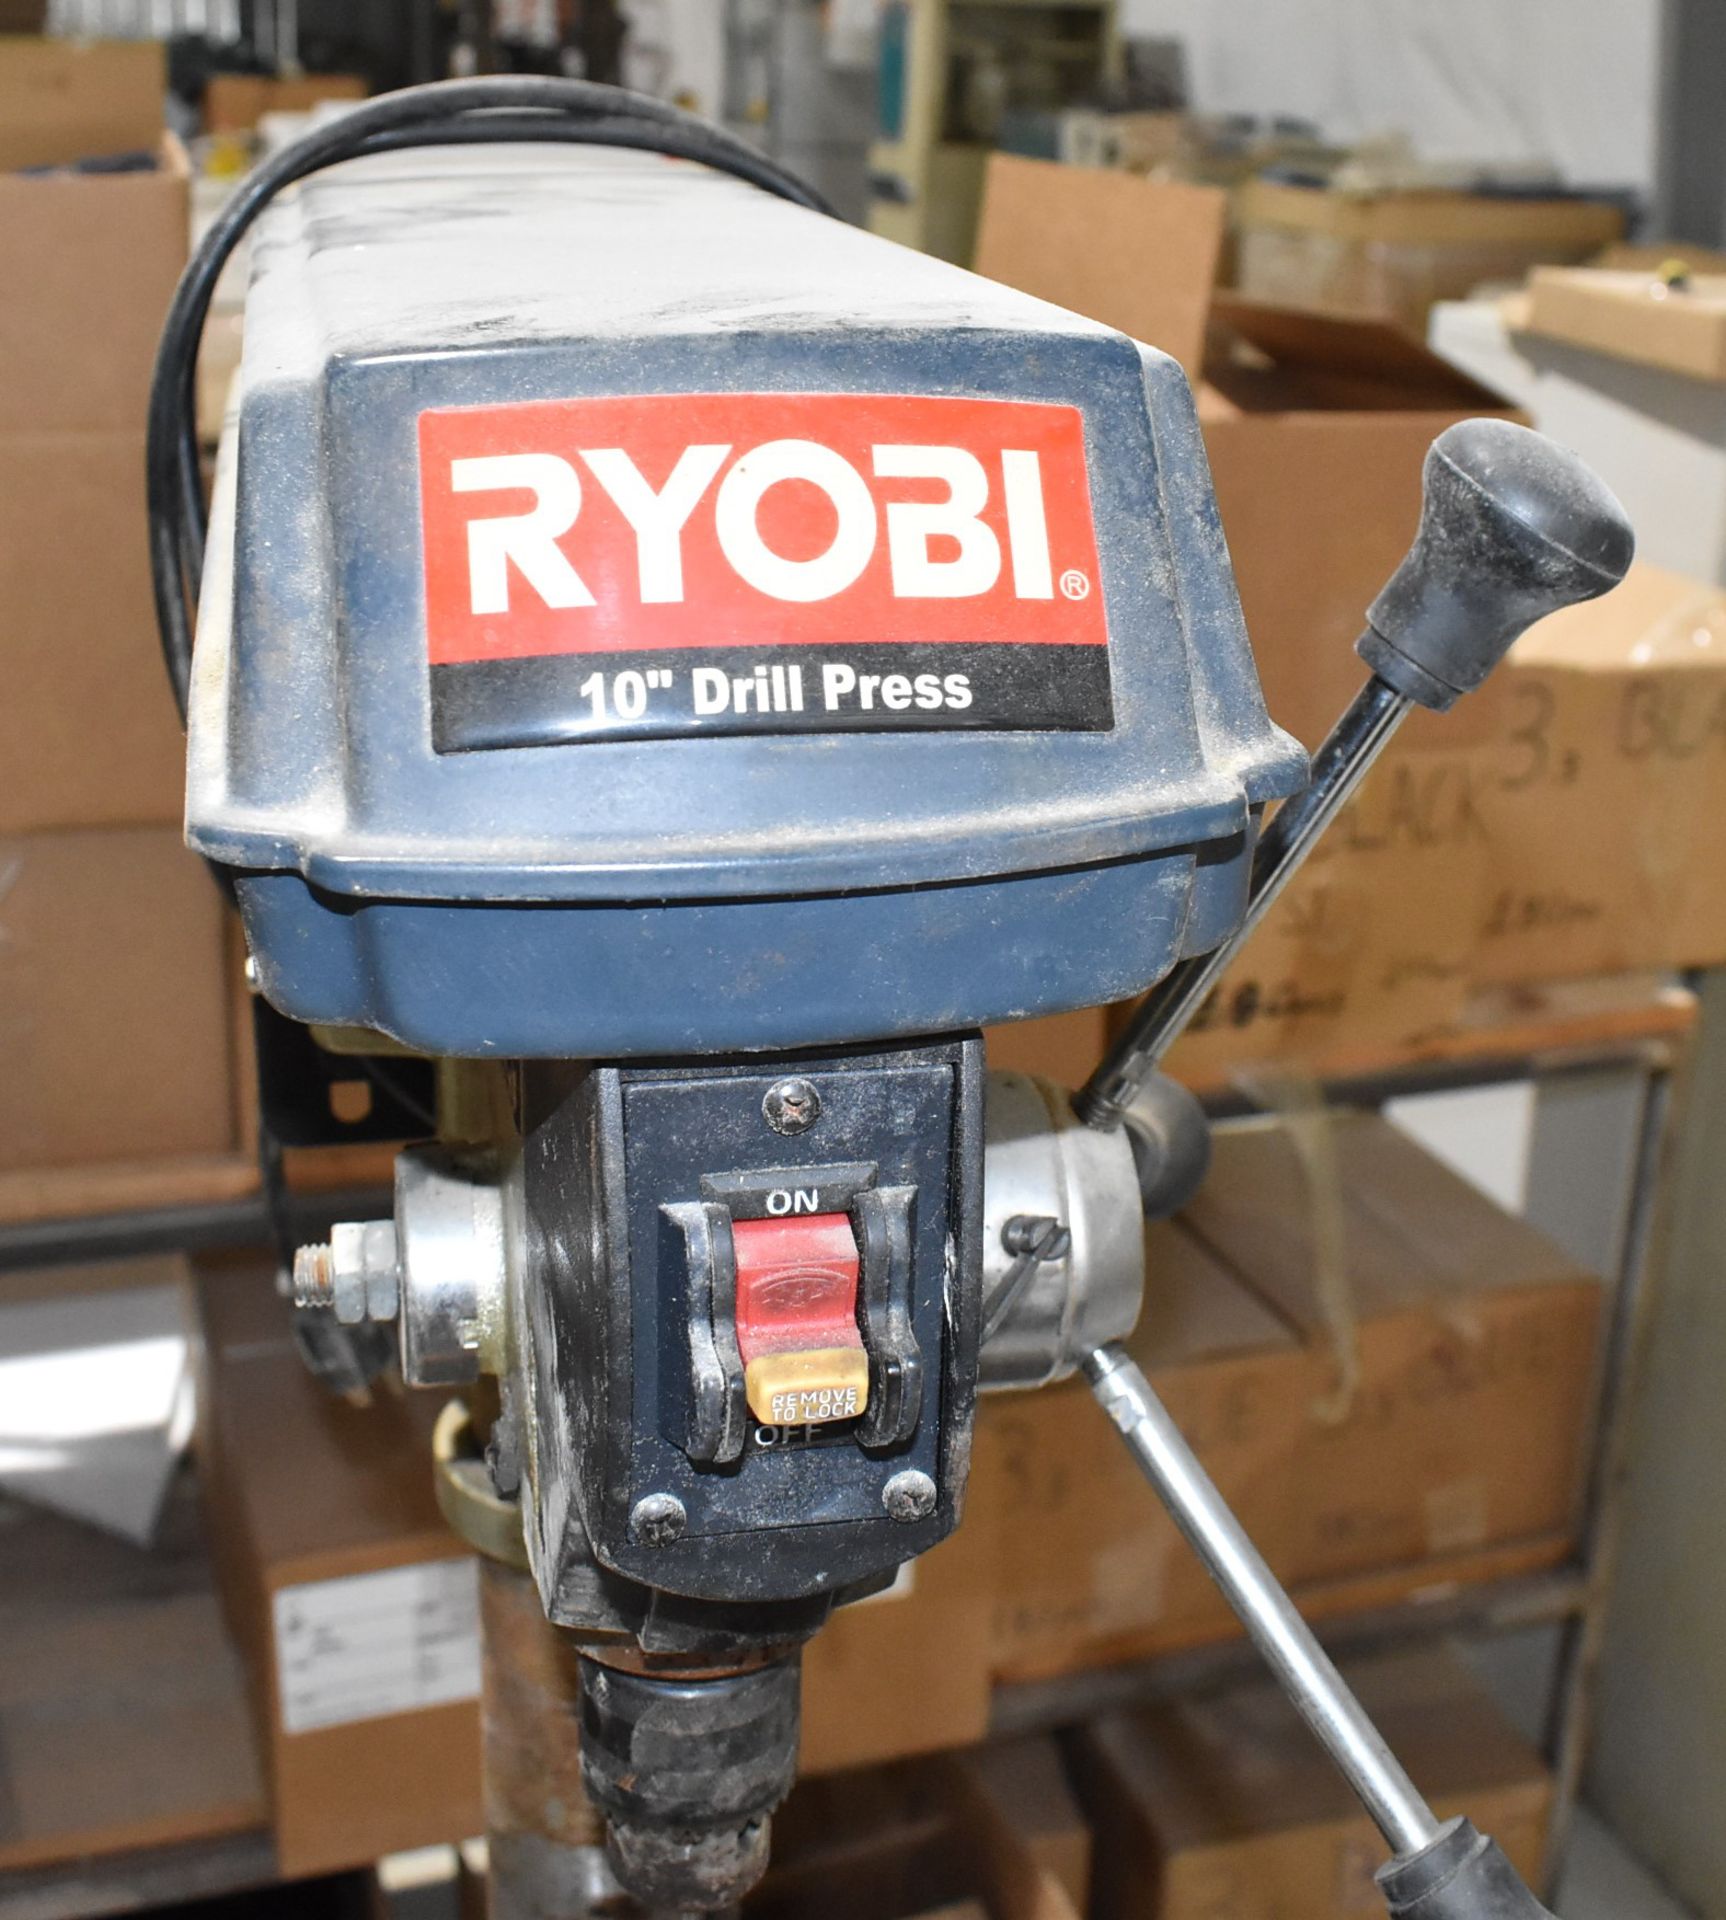 RYOBI 10" DRILL PRESS, S/N C043420278 - Image 3 of 4